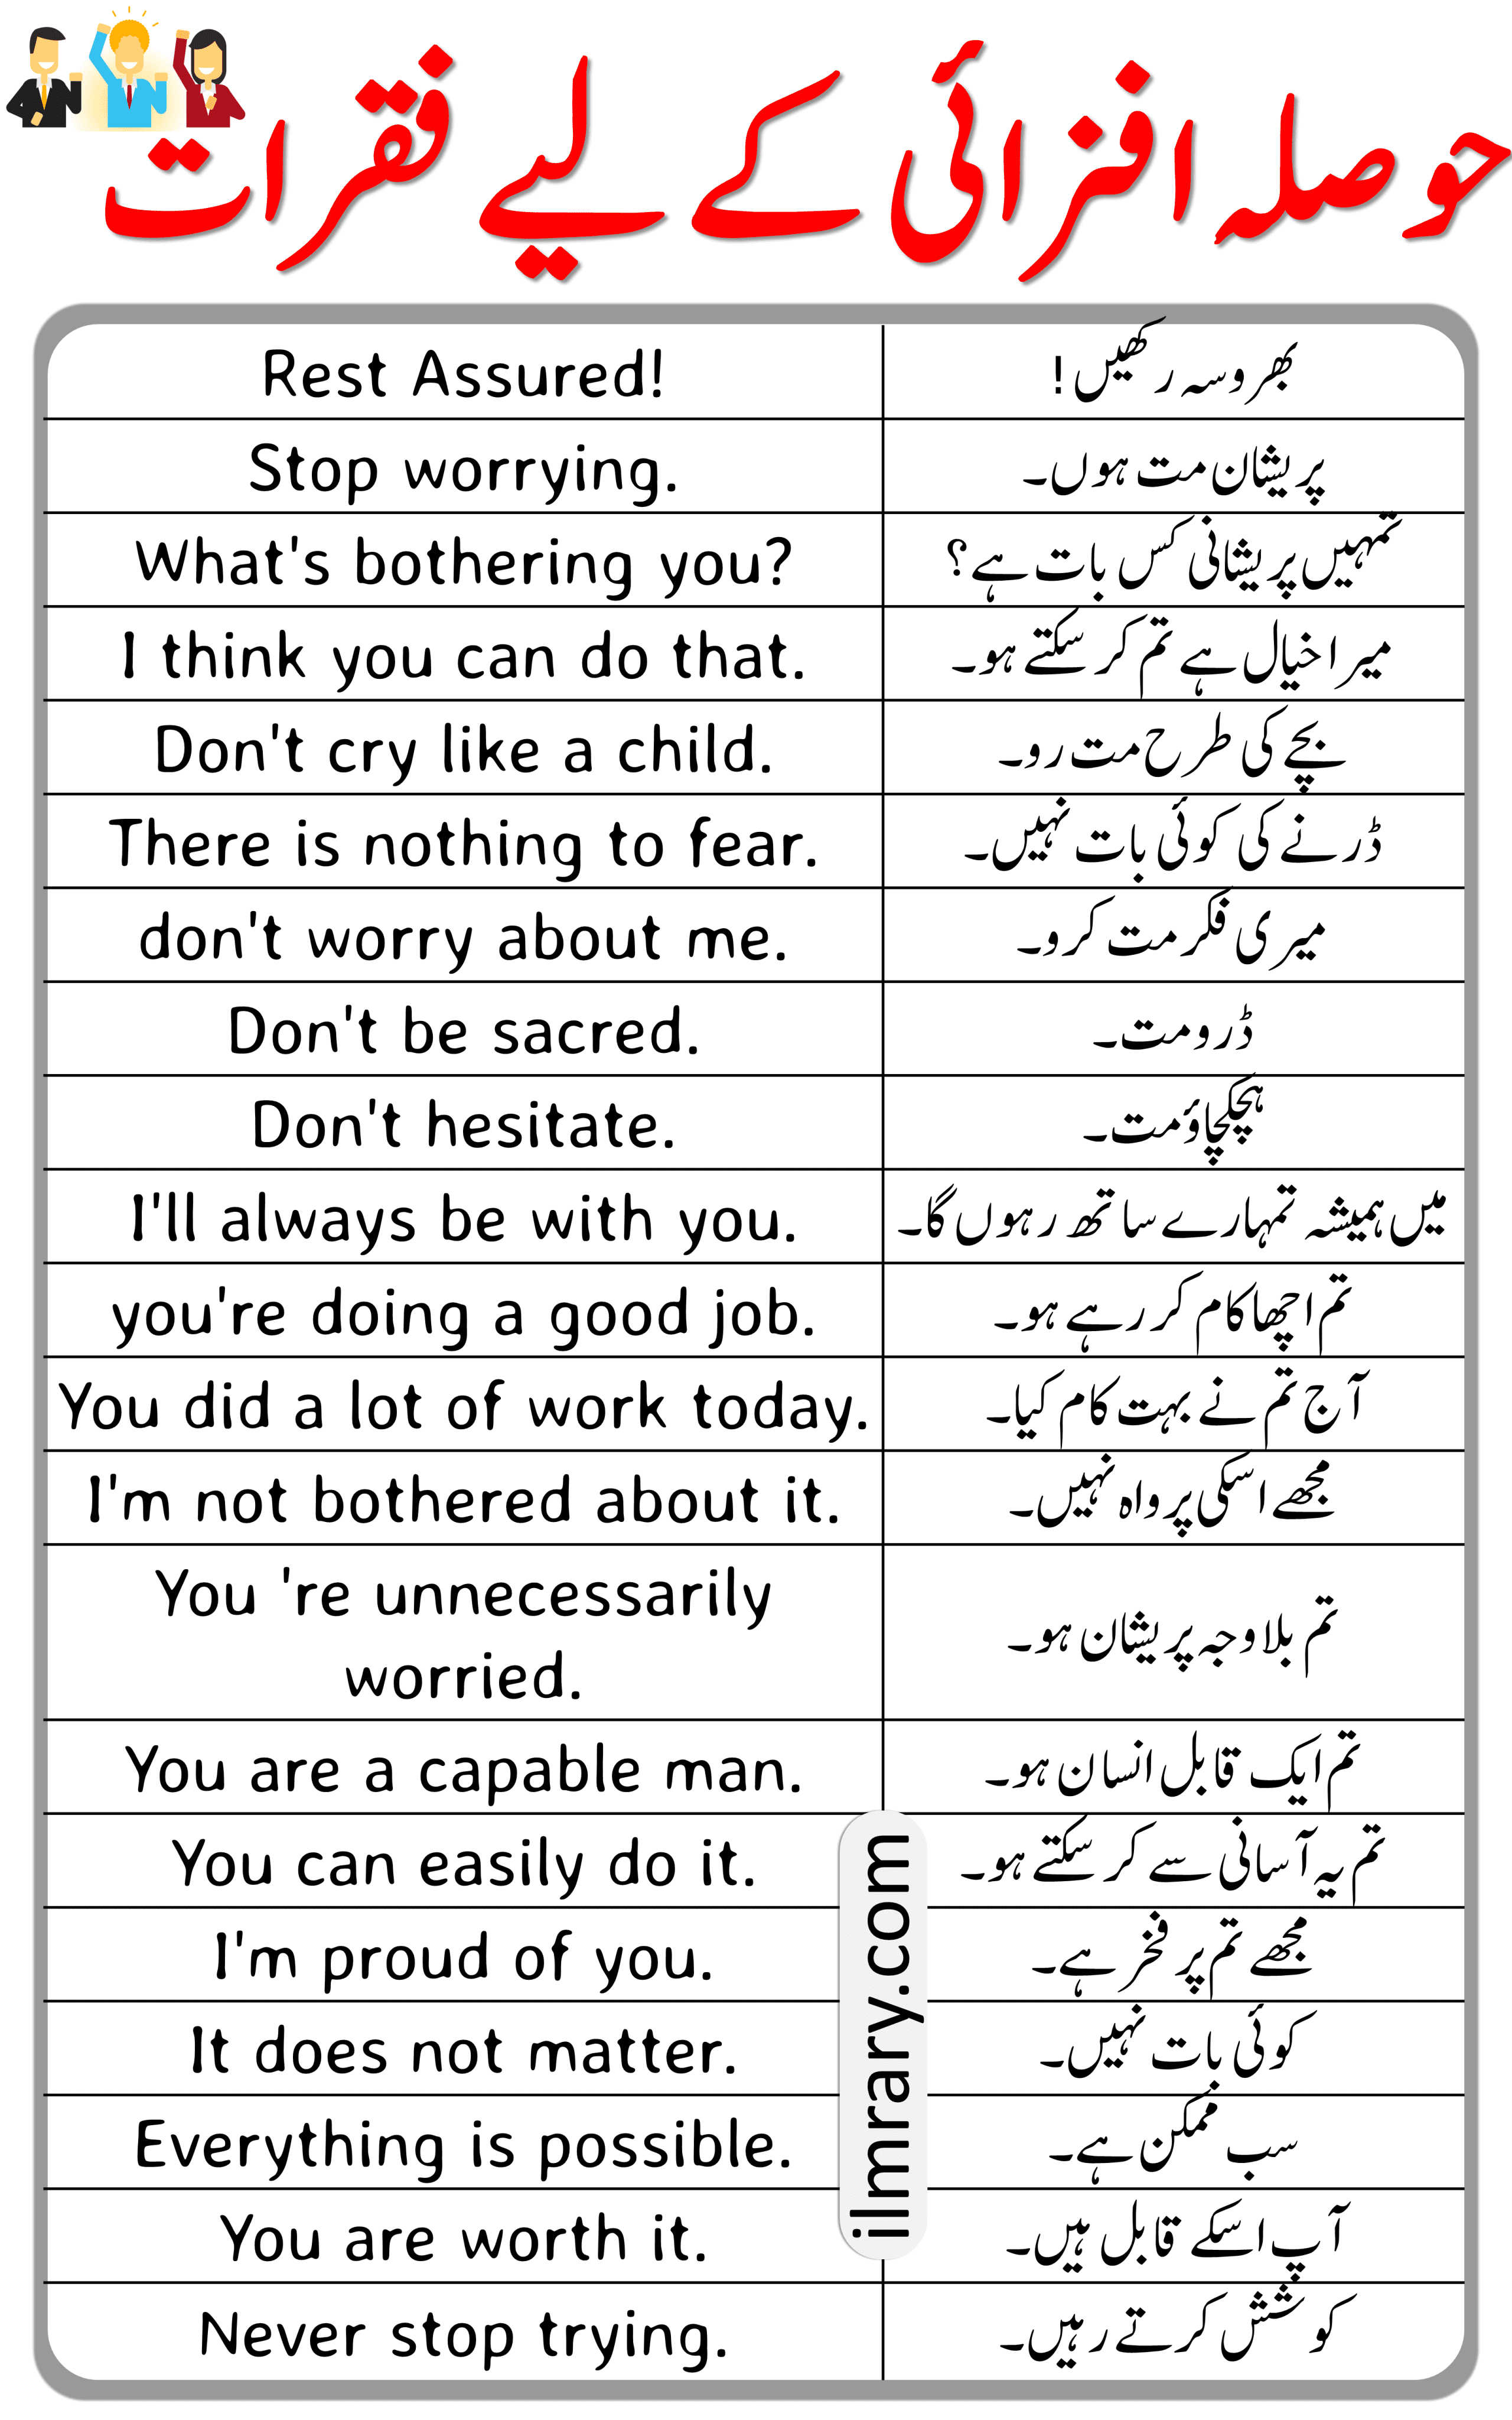 40 English Sentences for Encouragement with Urdu Translation